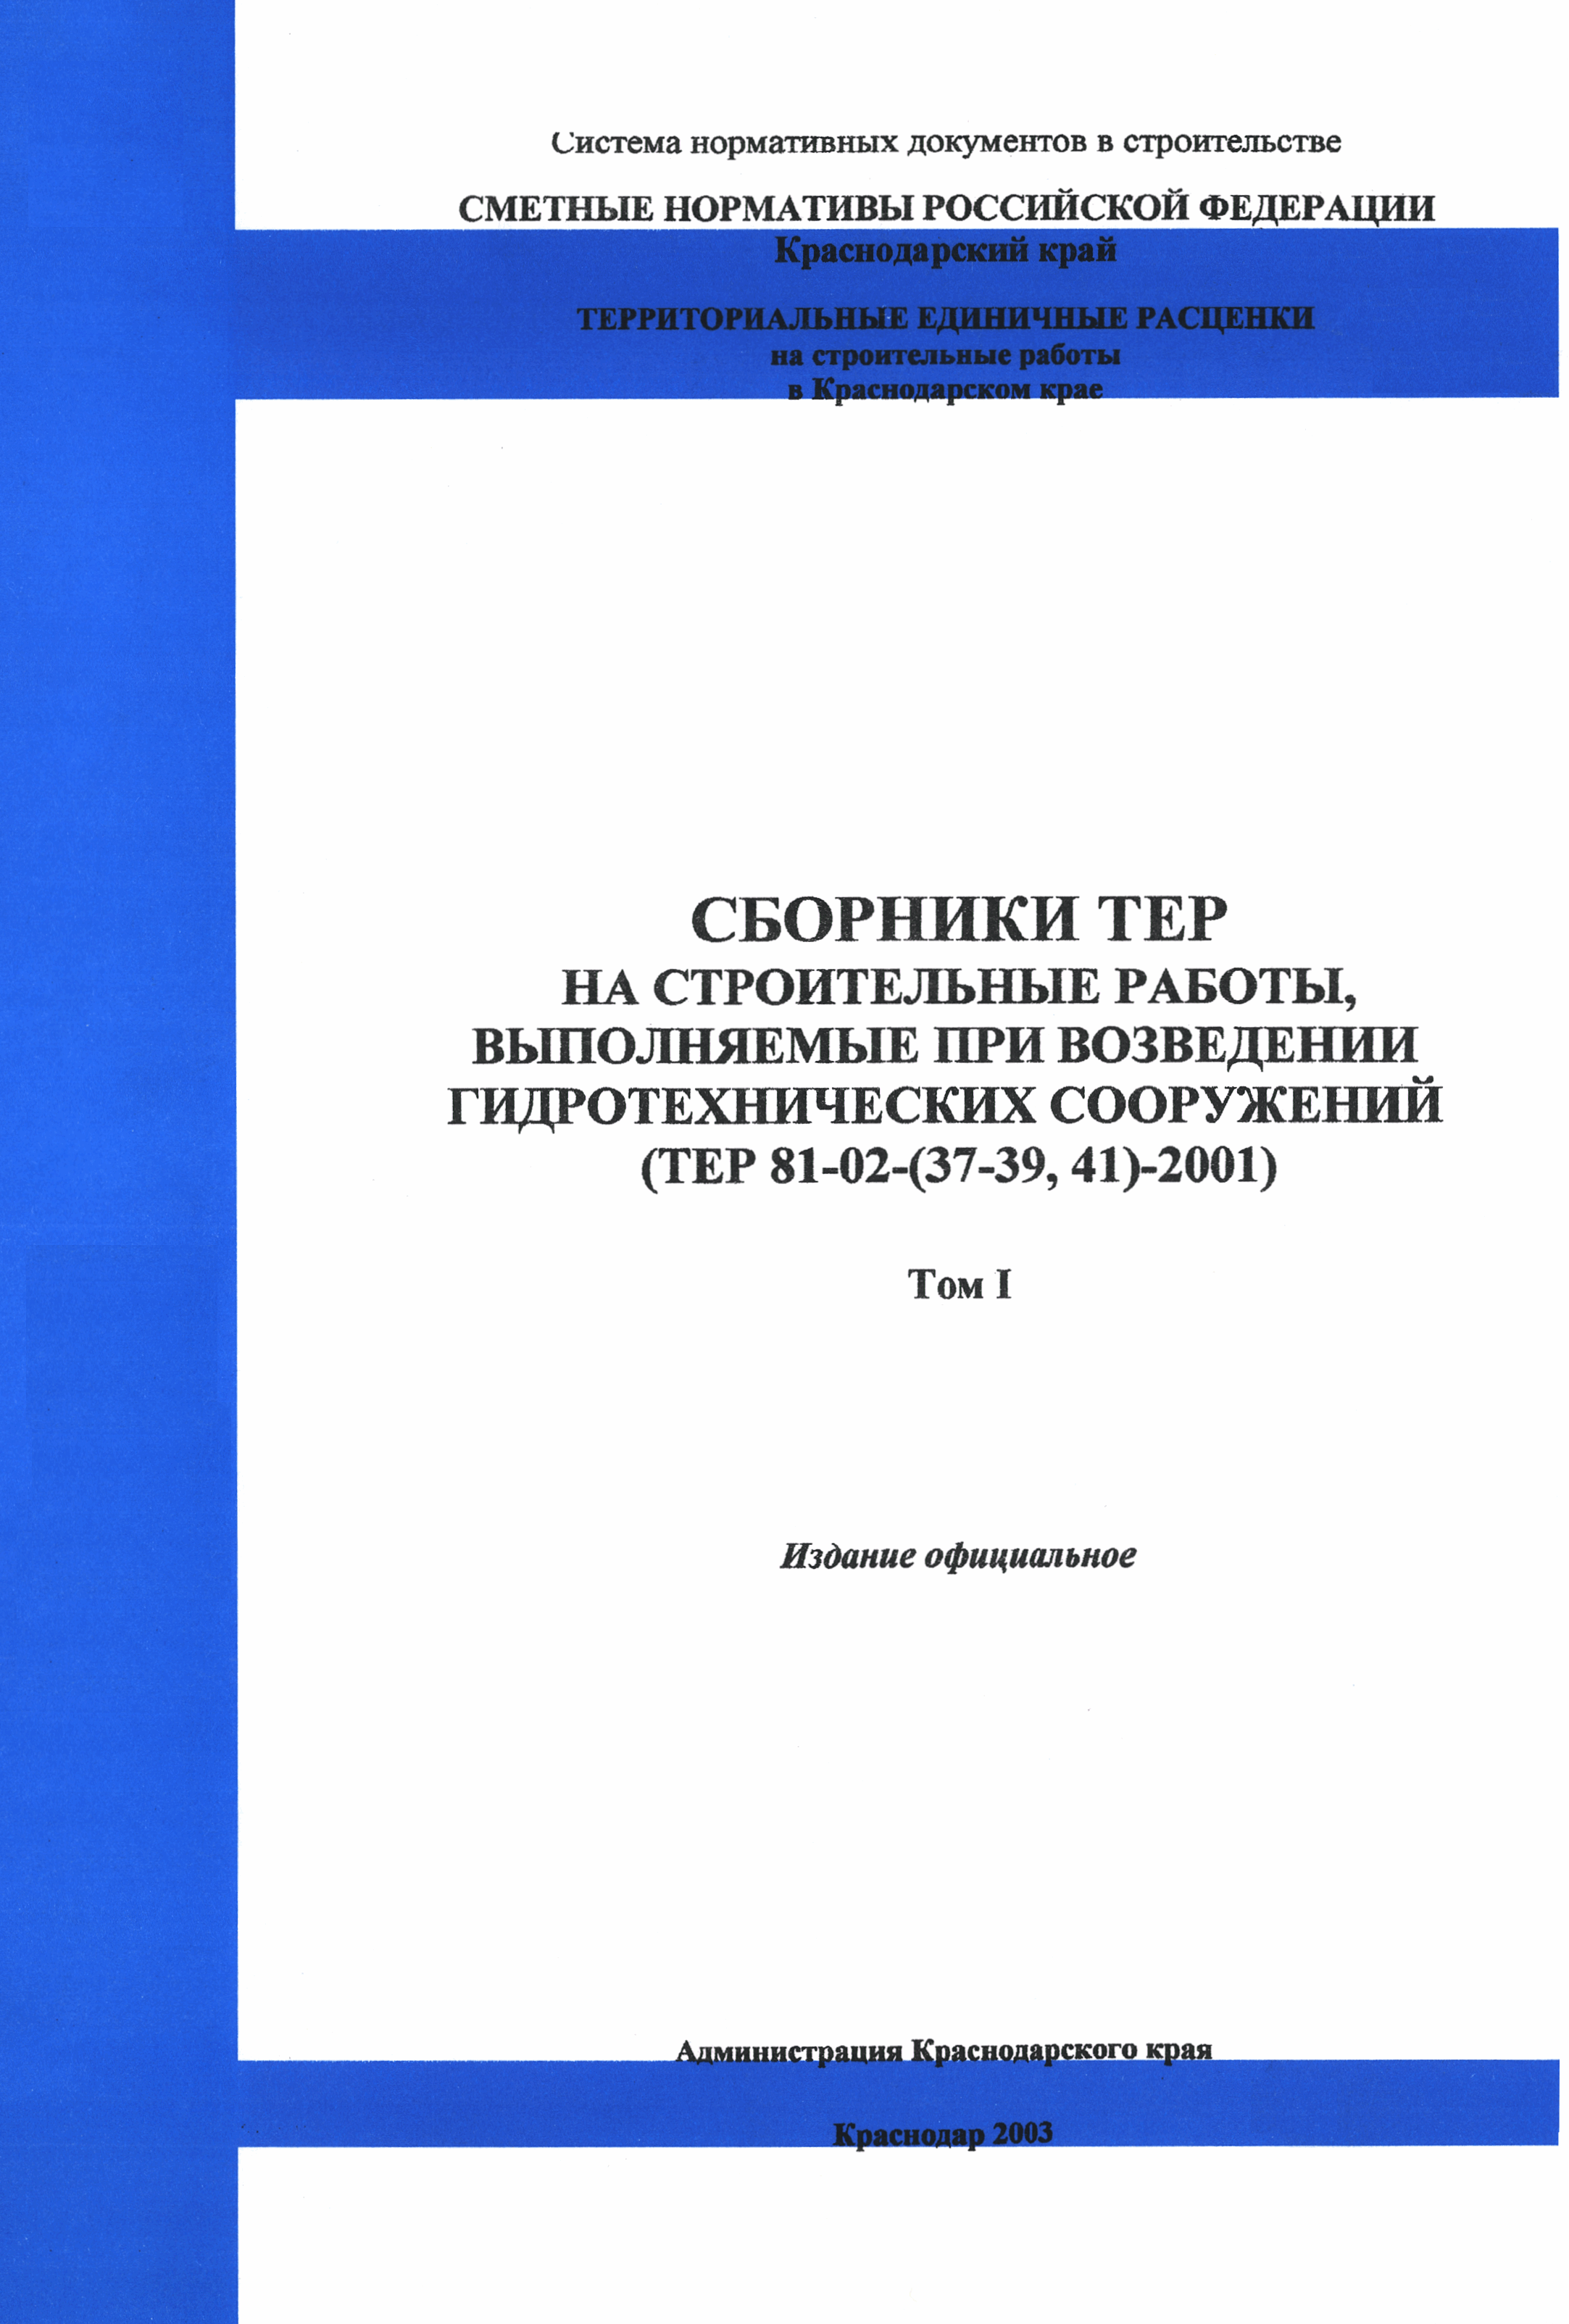 ТЕР Краснодарского края 2001-37